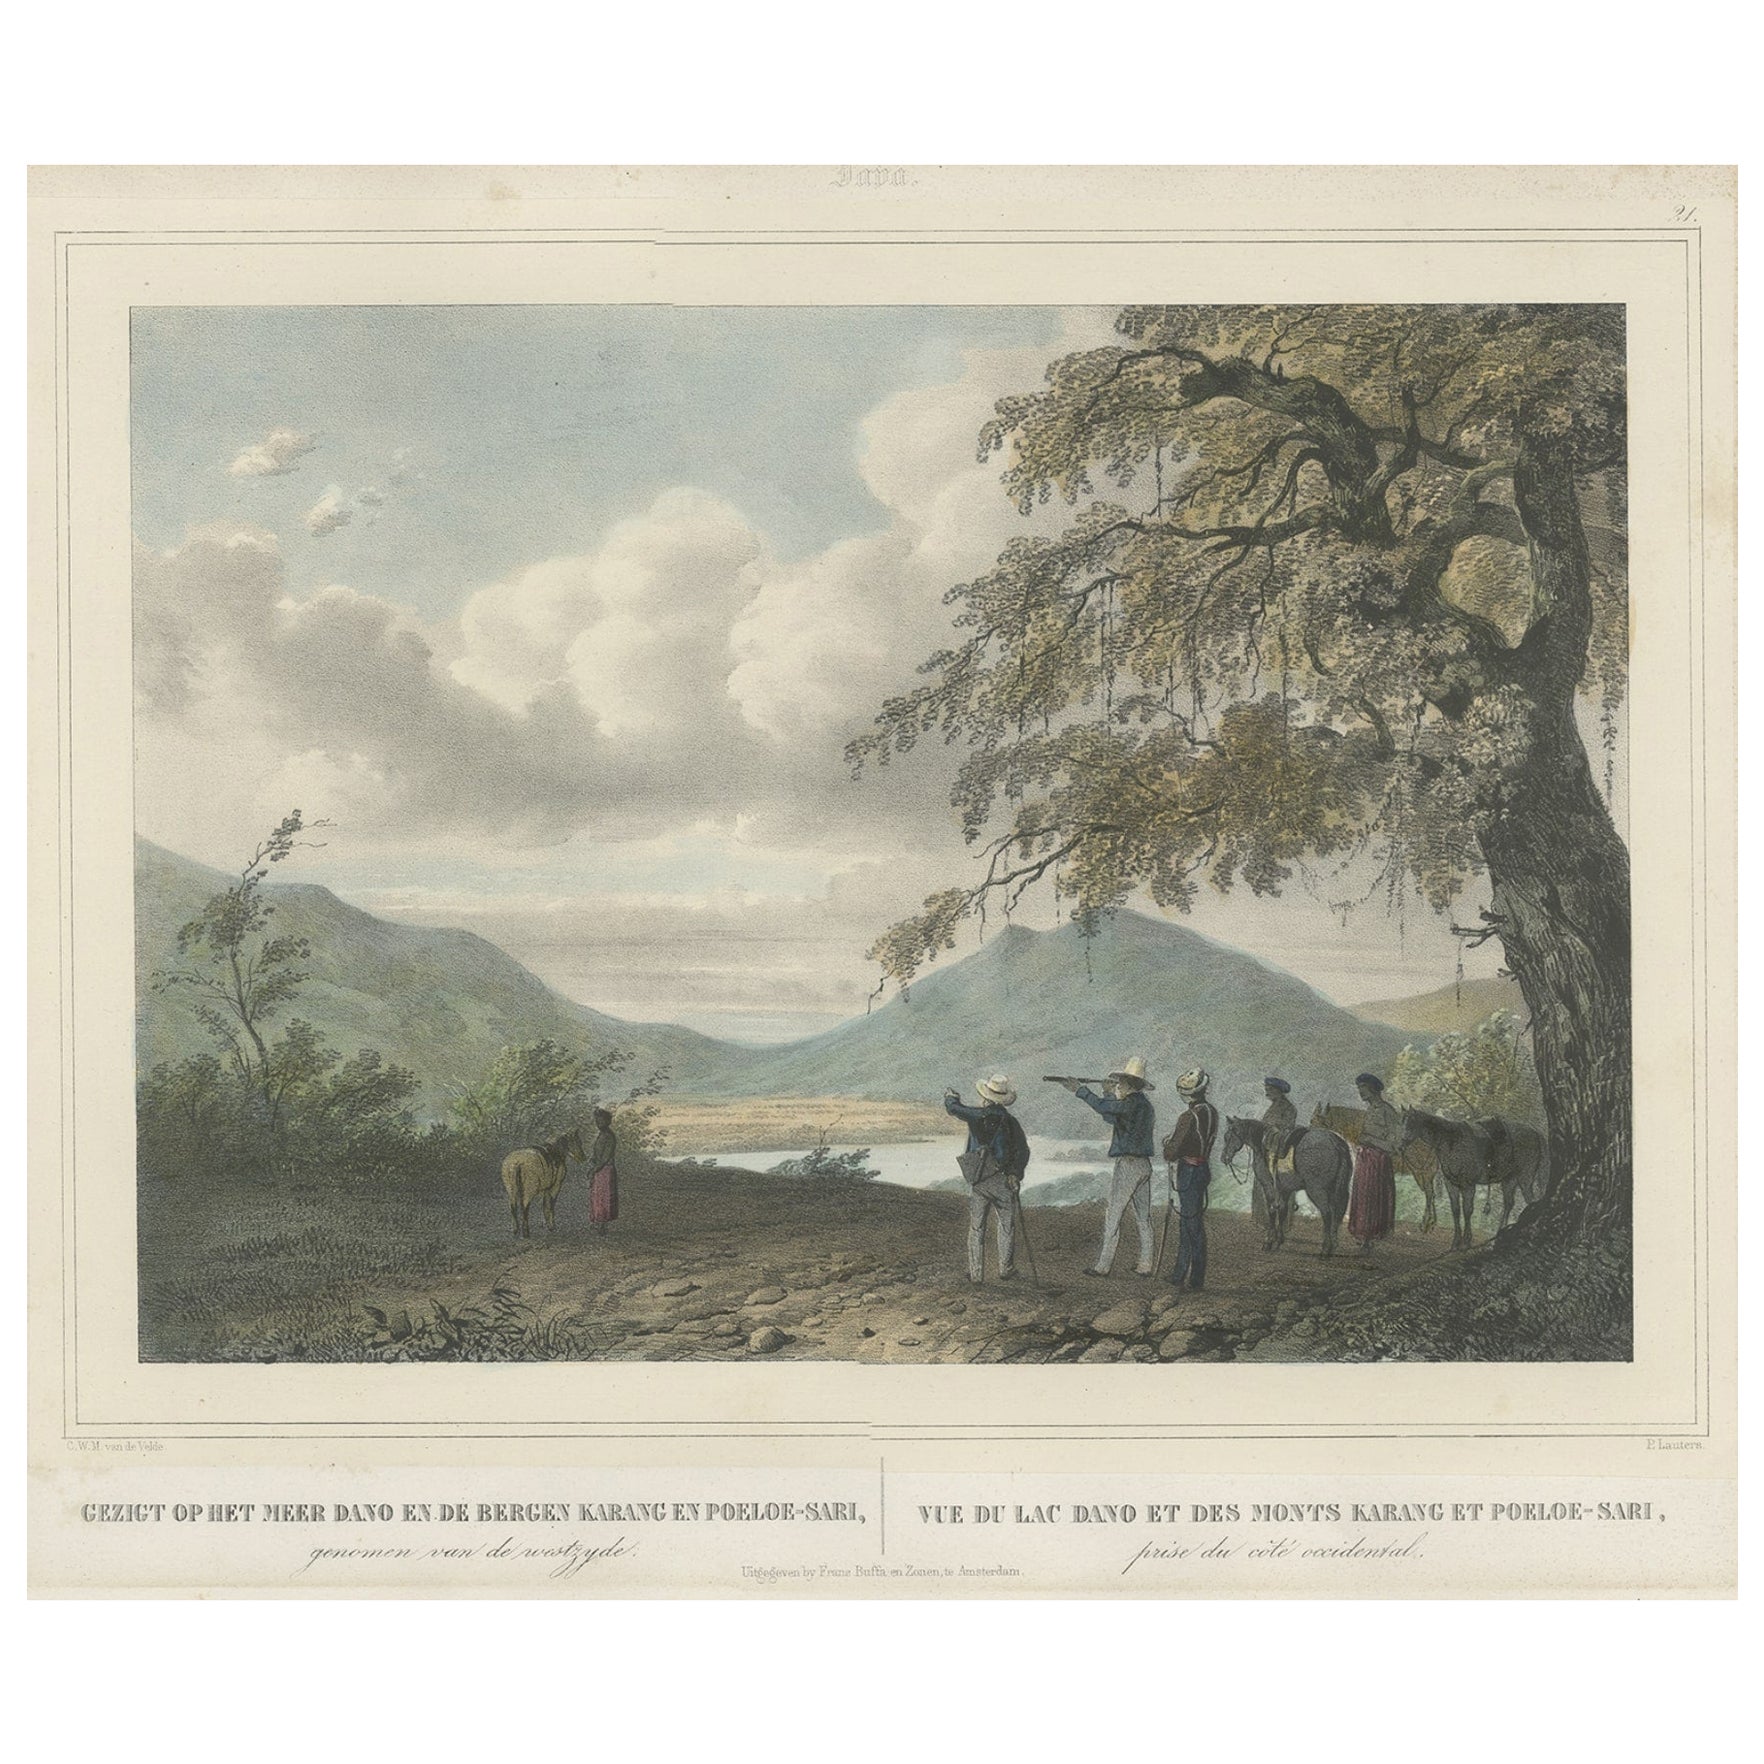 Antique Print of a Poeloe Sari and Karang Sari Mountain, West Java, Indonesia